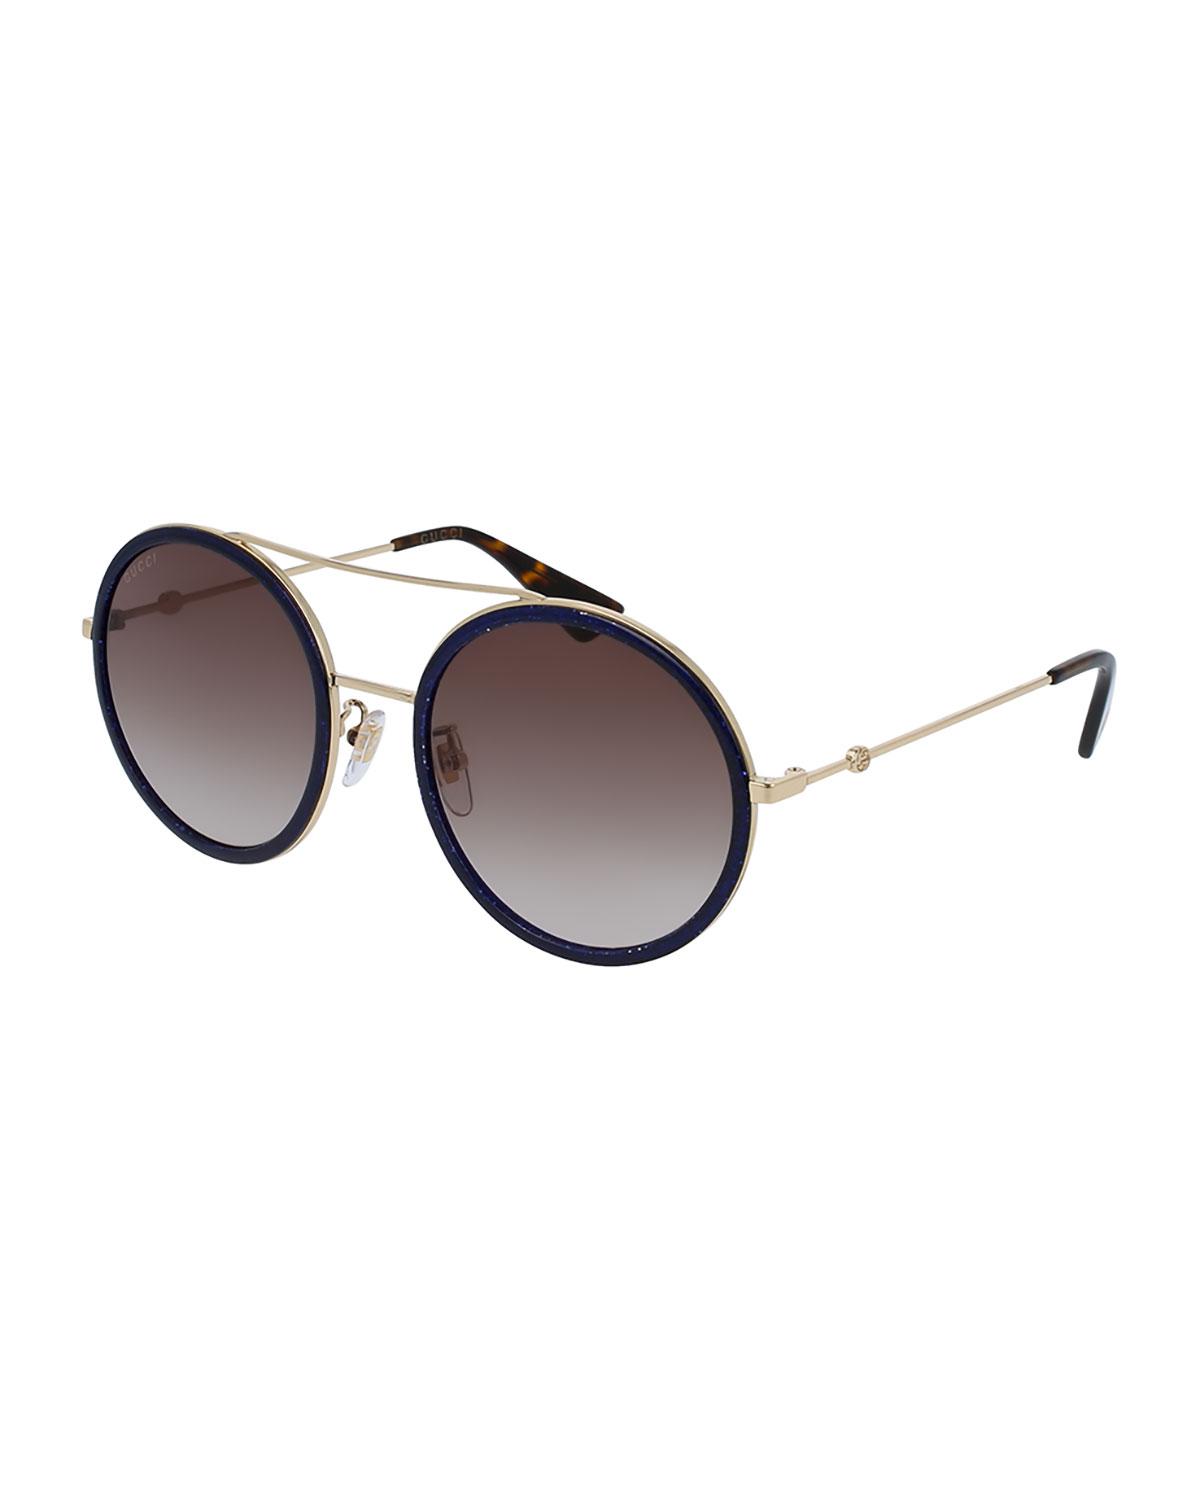 Gucci Glittered Round Metal Sunglasses in Gold (Metallic) - Lyst